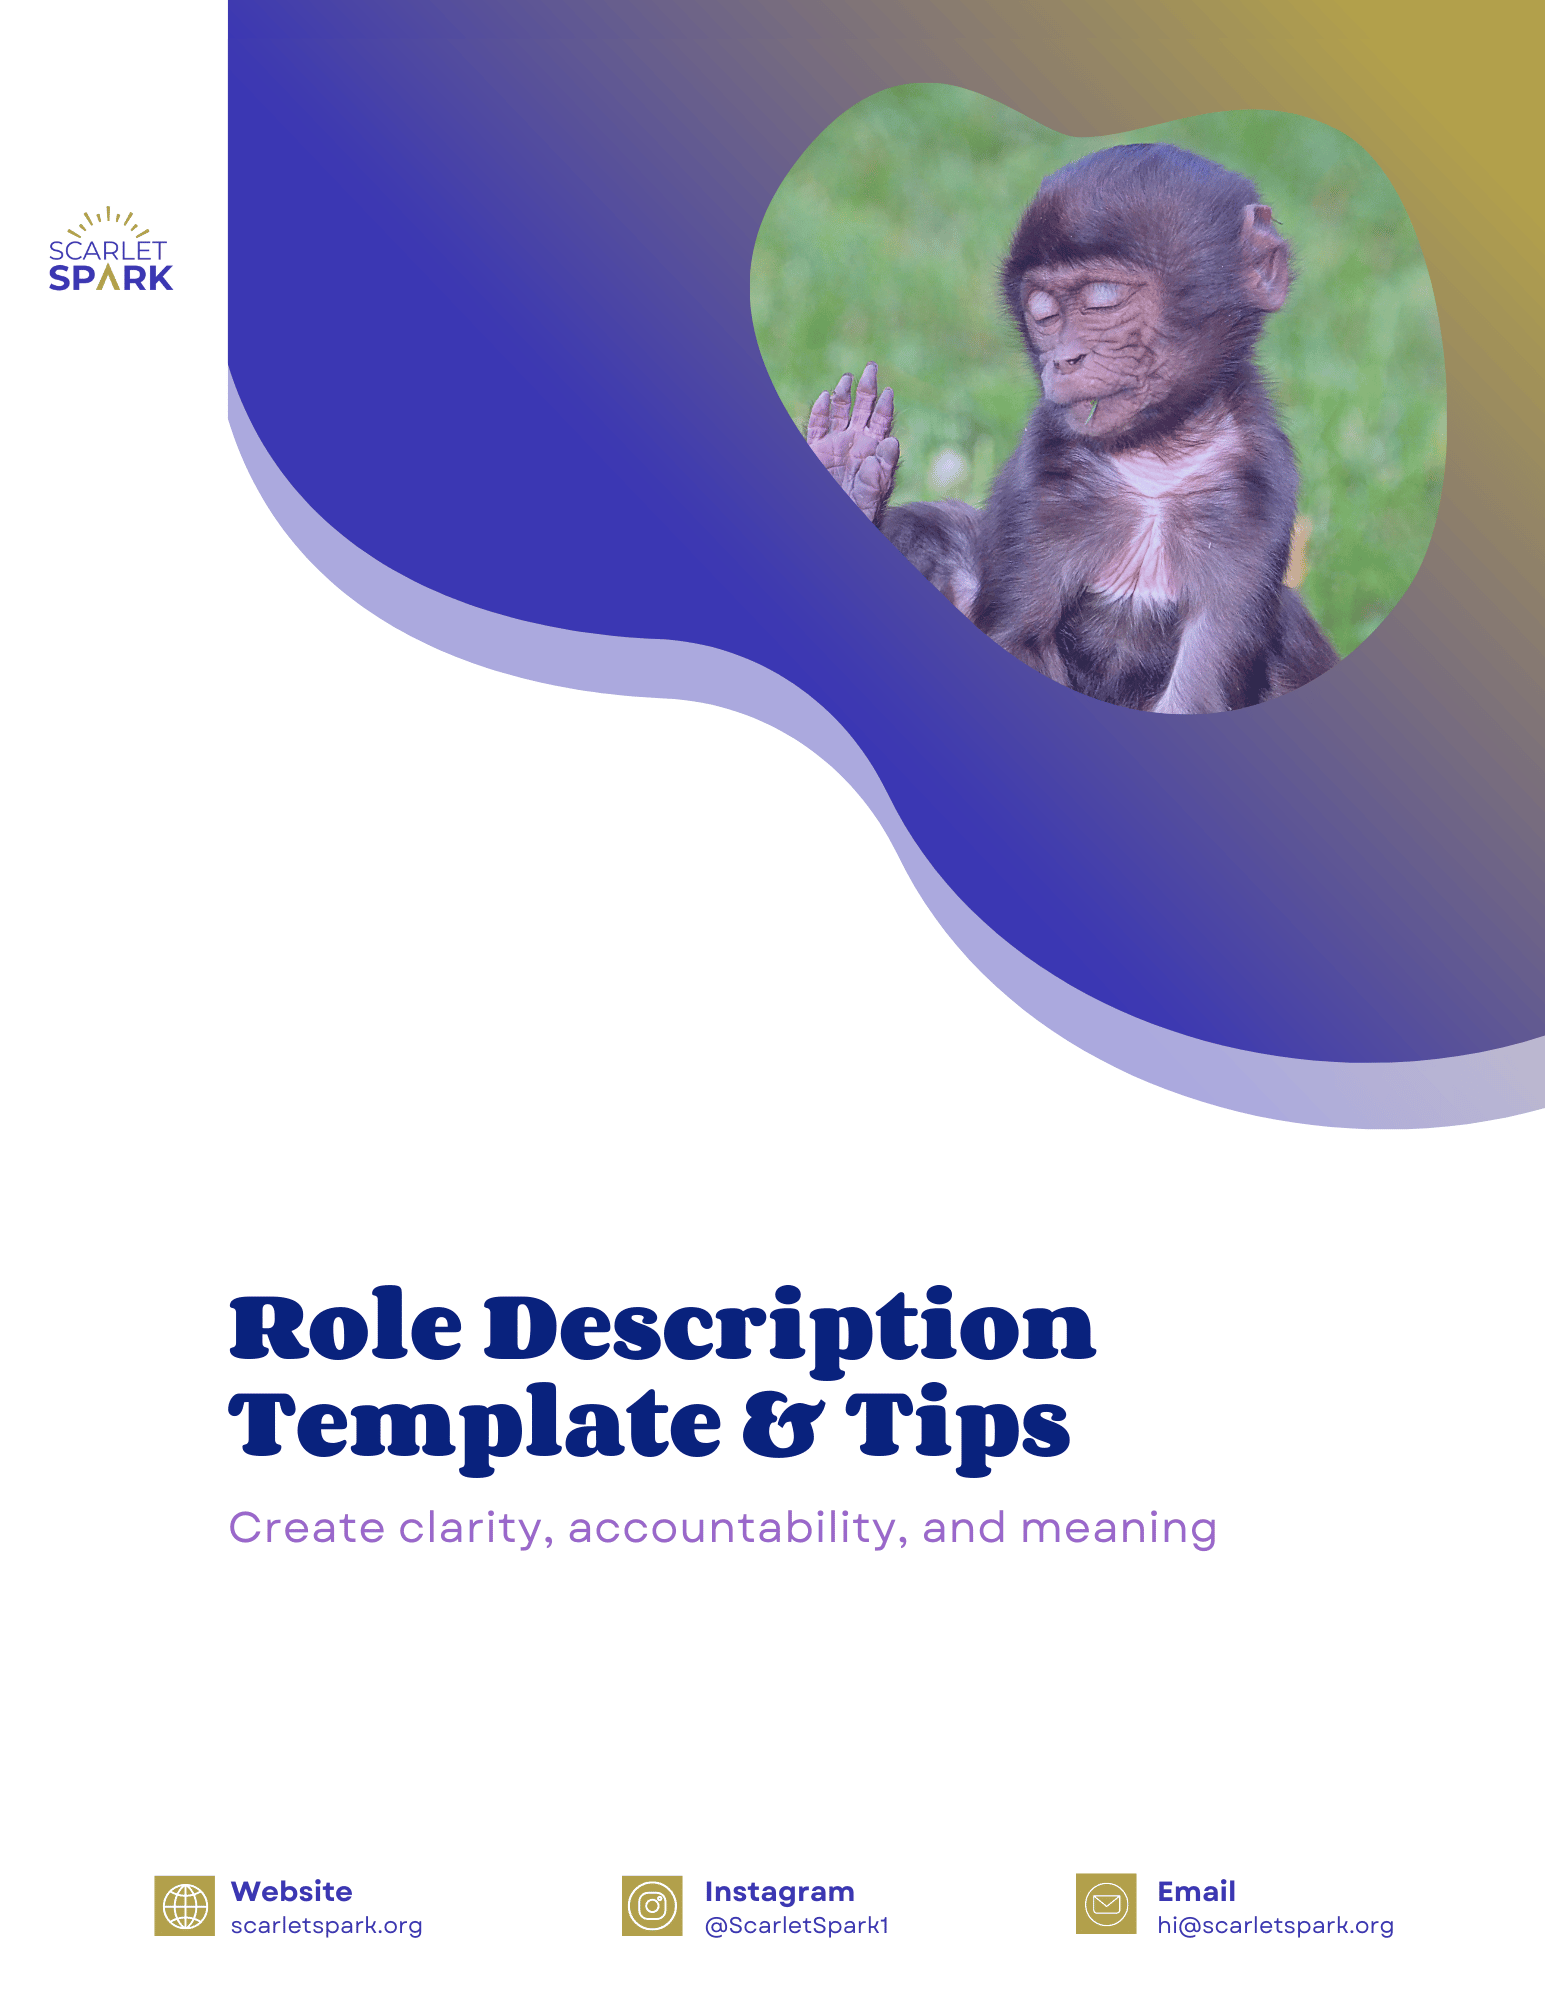 Role Description Template & Tips Cover Image